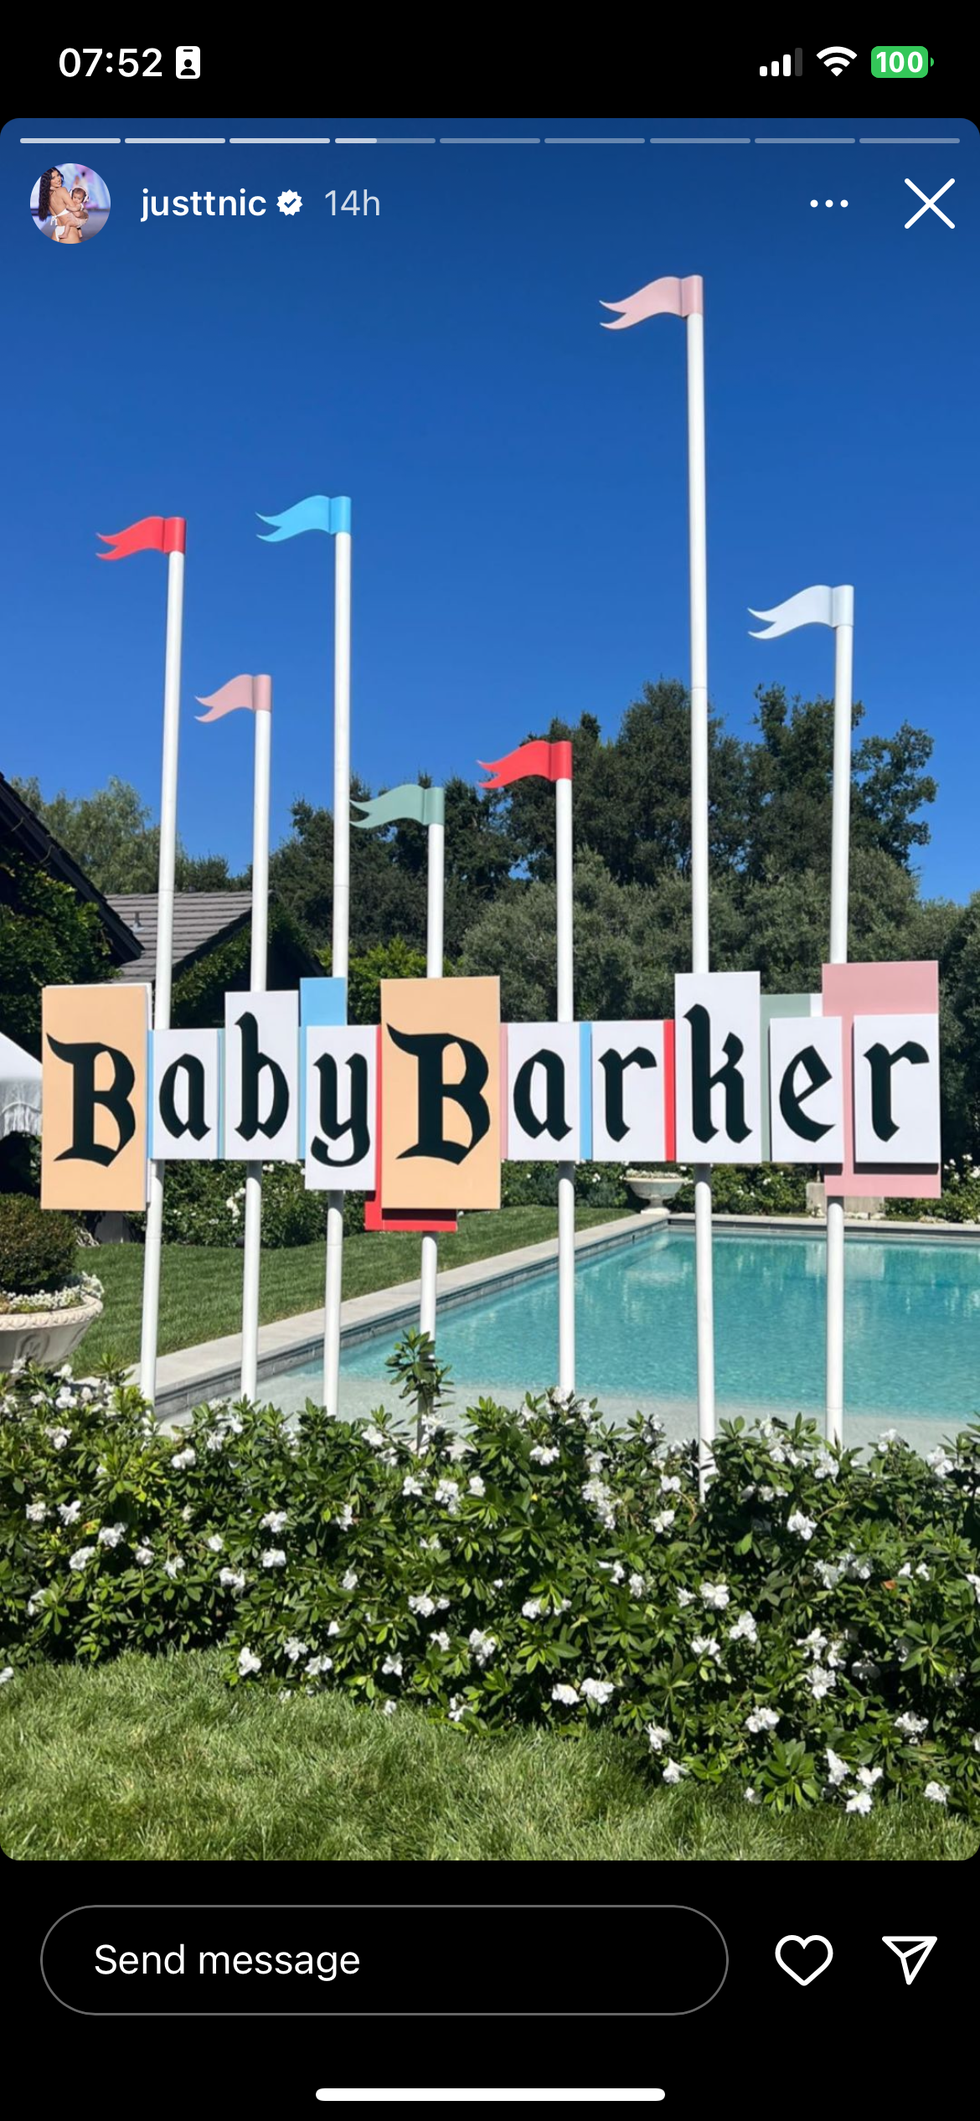 kourtney kardashian's baby shower